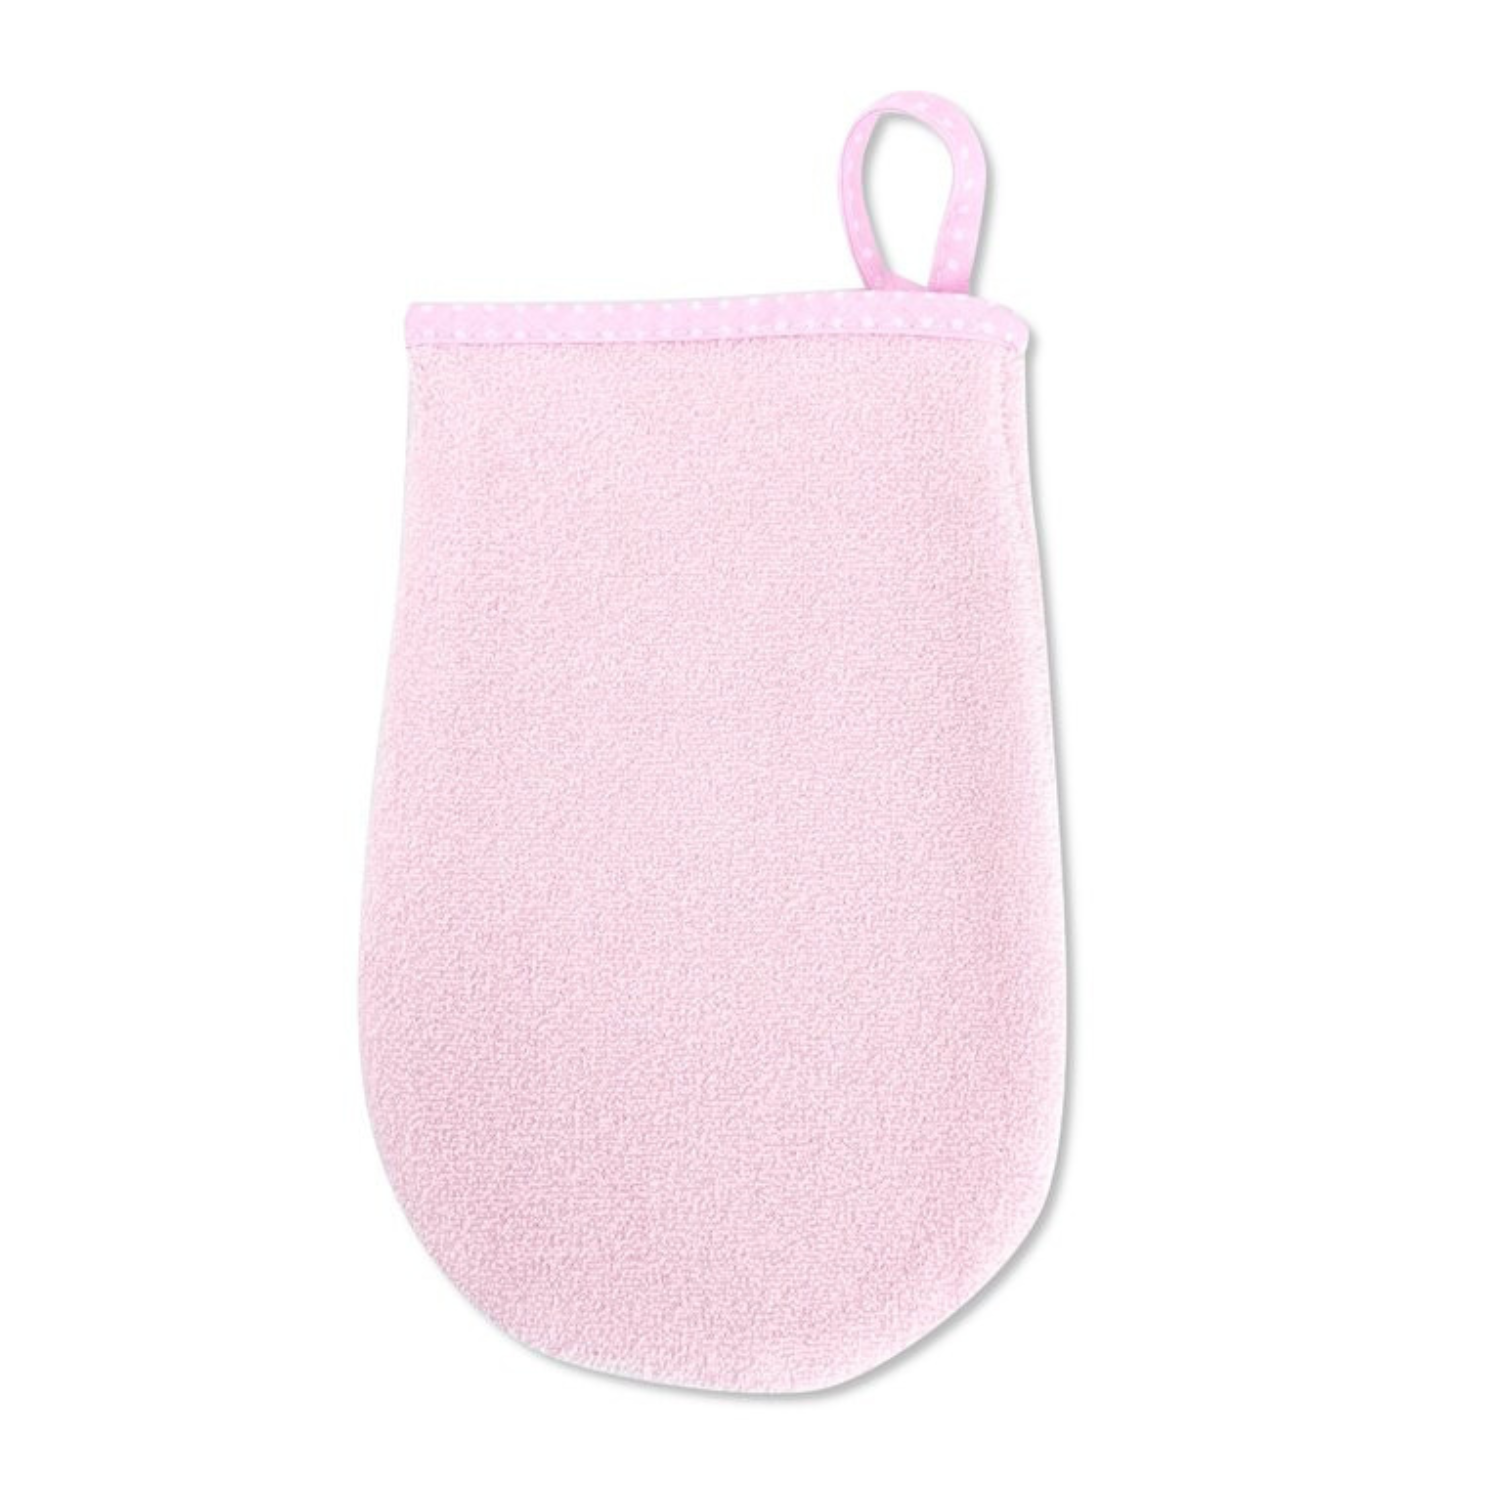 Manusa de baie pentru bebelusi, 12 x 21 cm, Pink, MiniNu